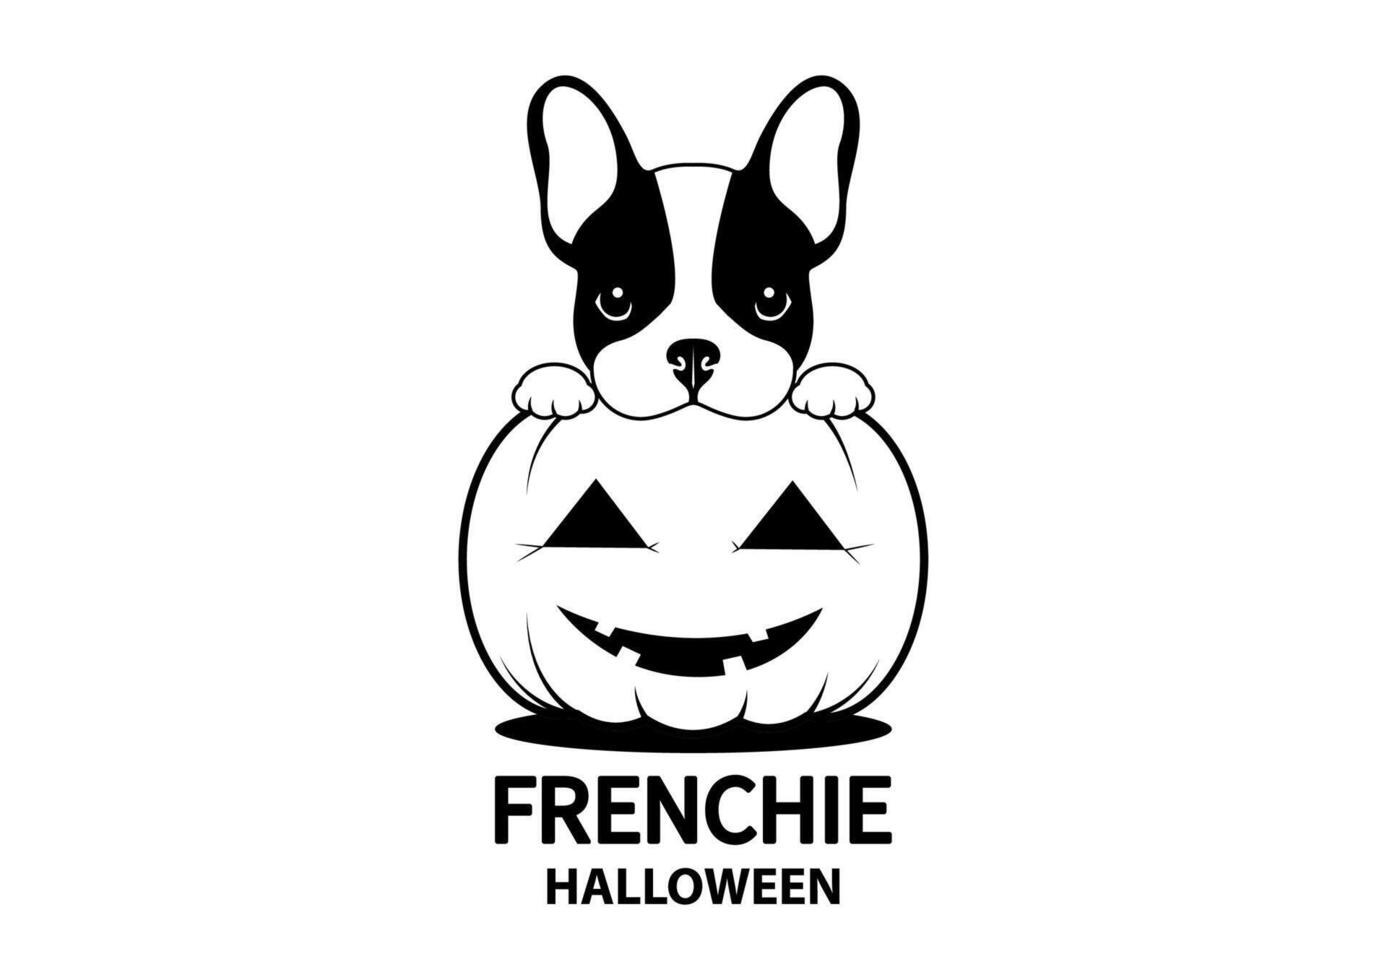 Adorable French Bulldog on The Ghost Pumpkin Halloween vector